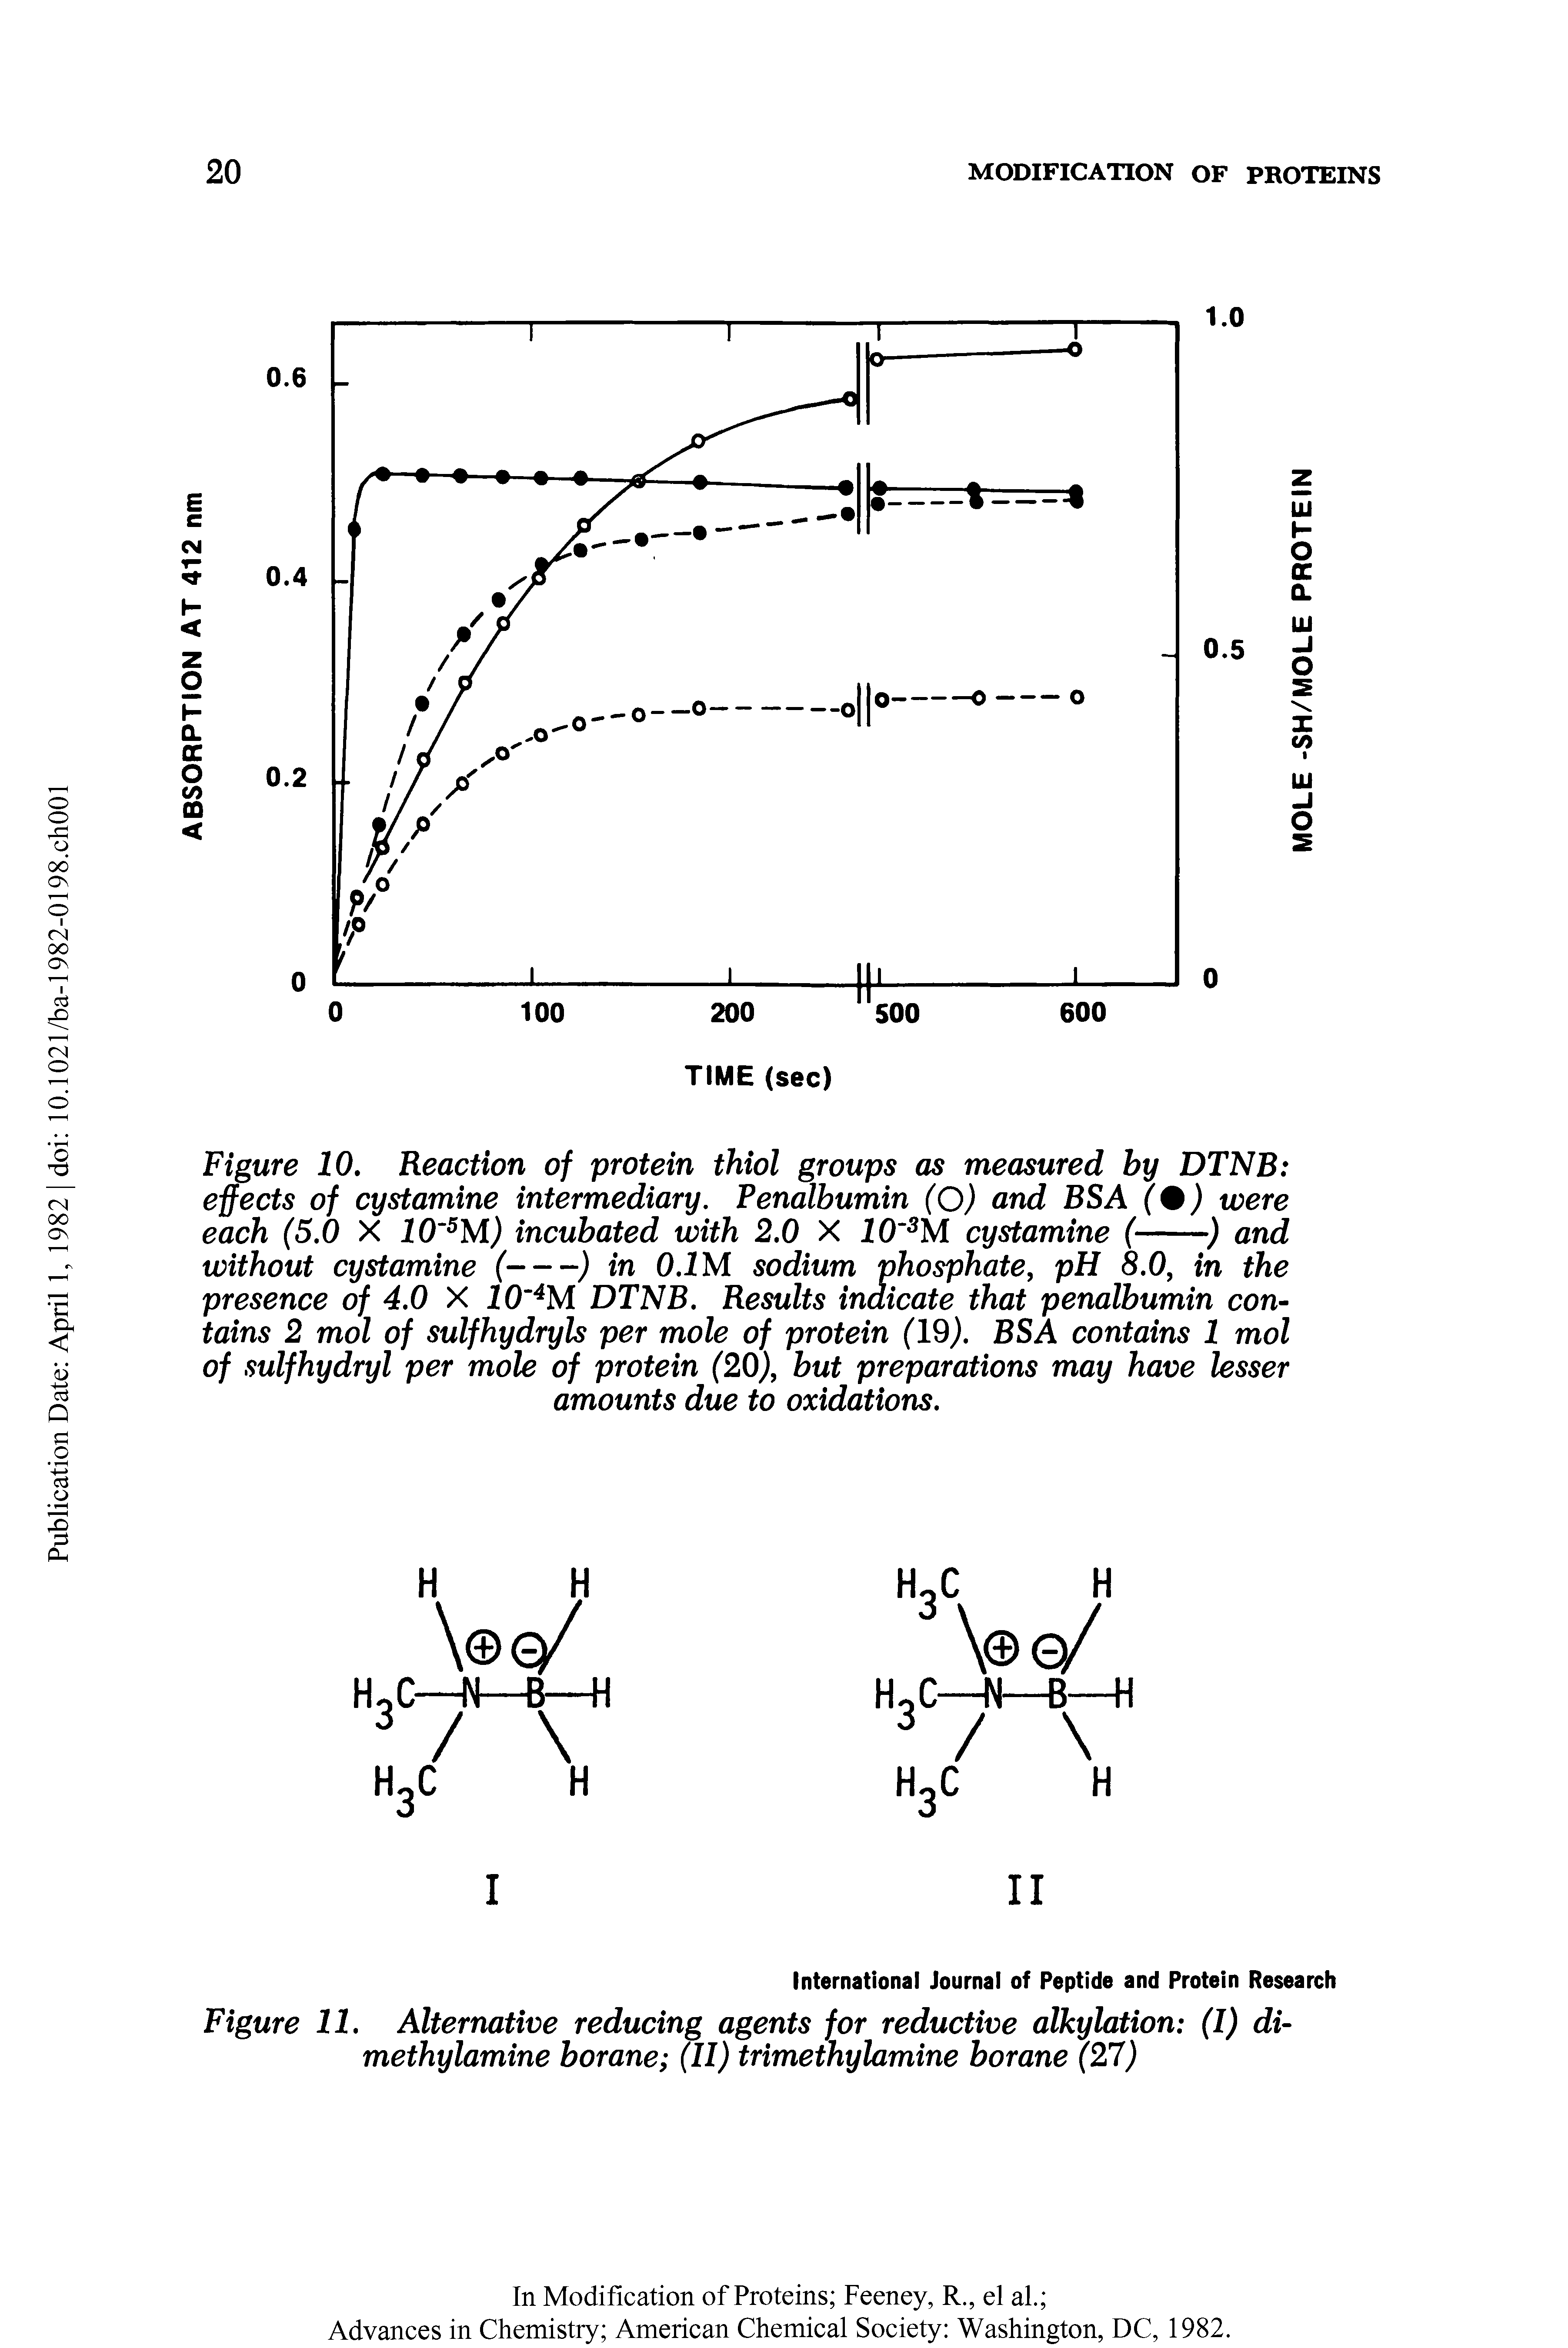 Figure 11. Alternative reducing agents for reductive alkylation (1) di-methylamine borane (II) trimethylamine borane (27)...